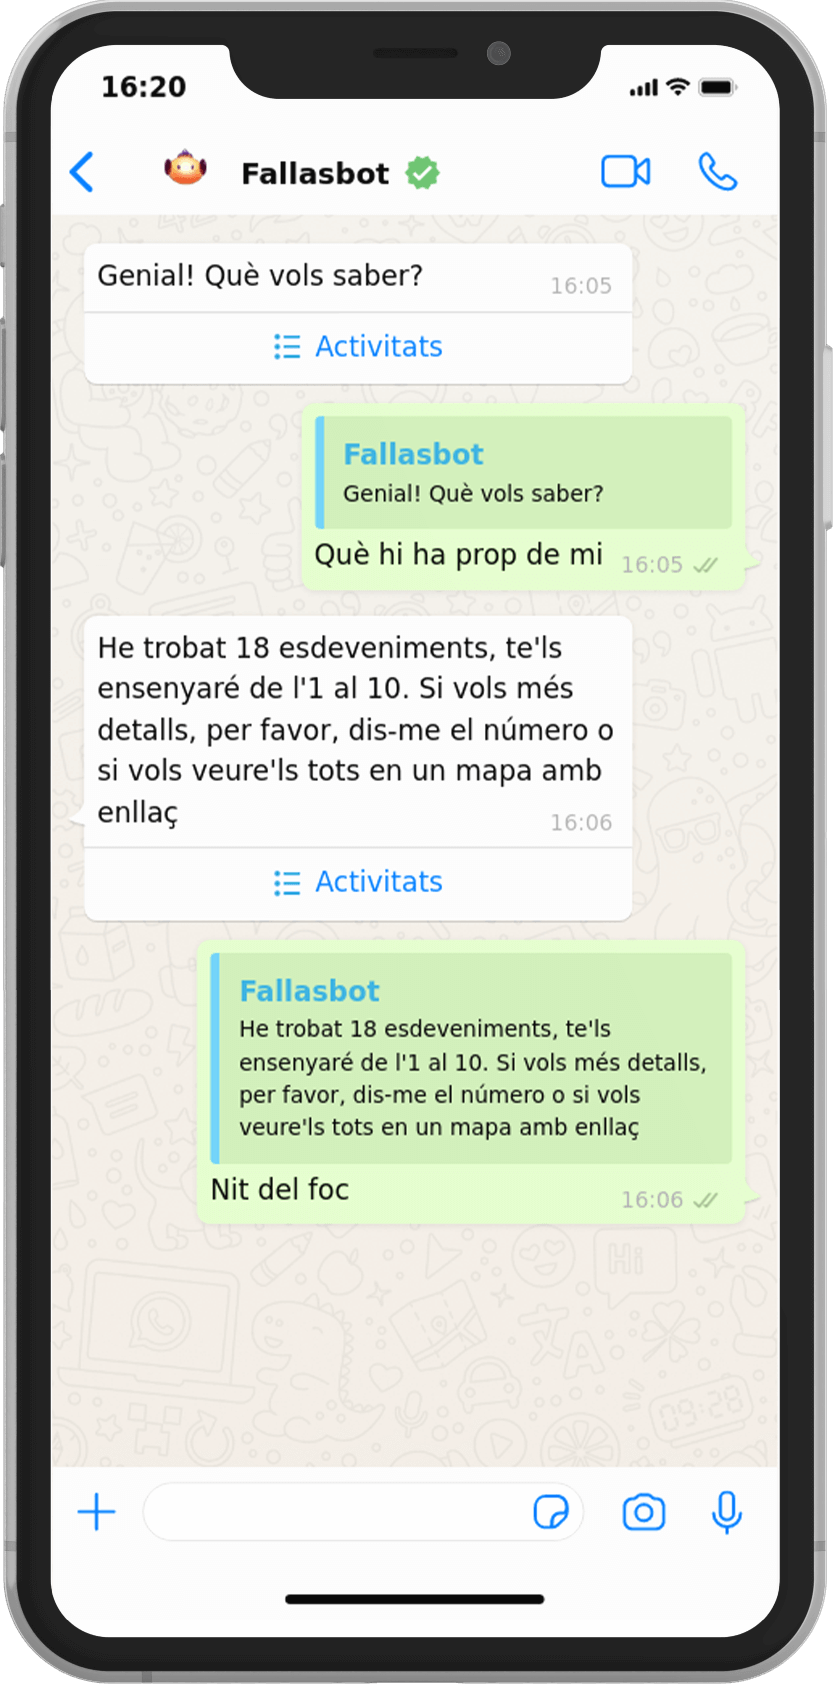 Fallasbot assistent virtual en WhatsApp